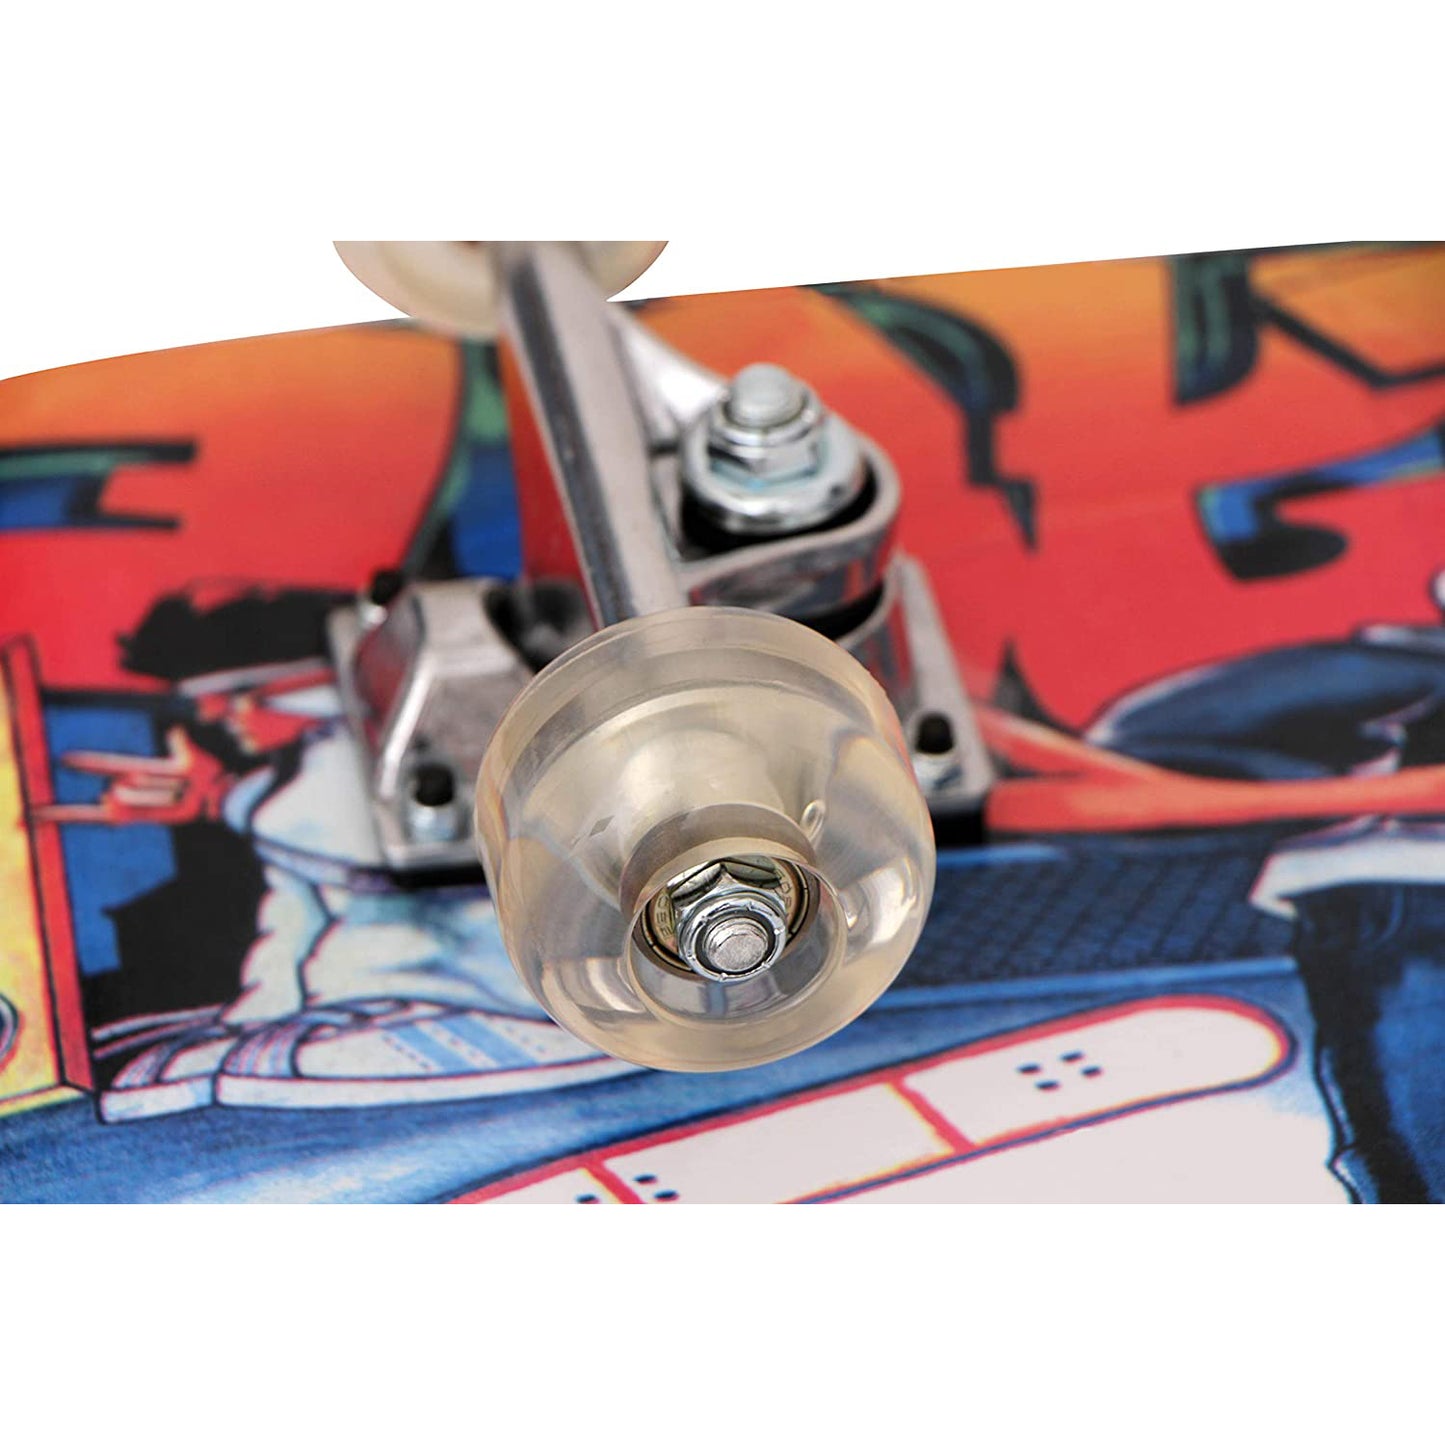 Nivia 801 Skateboard - Available for Seniors & Junior - Best Price online Prokicksports.com